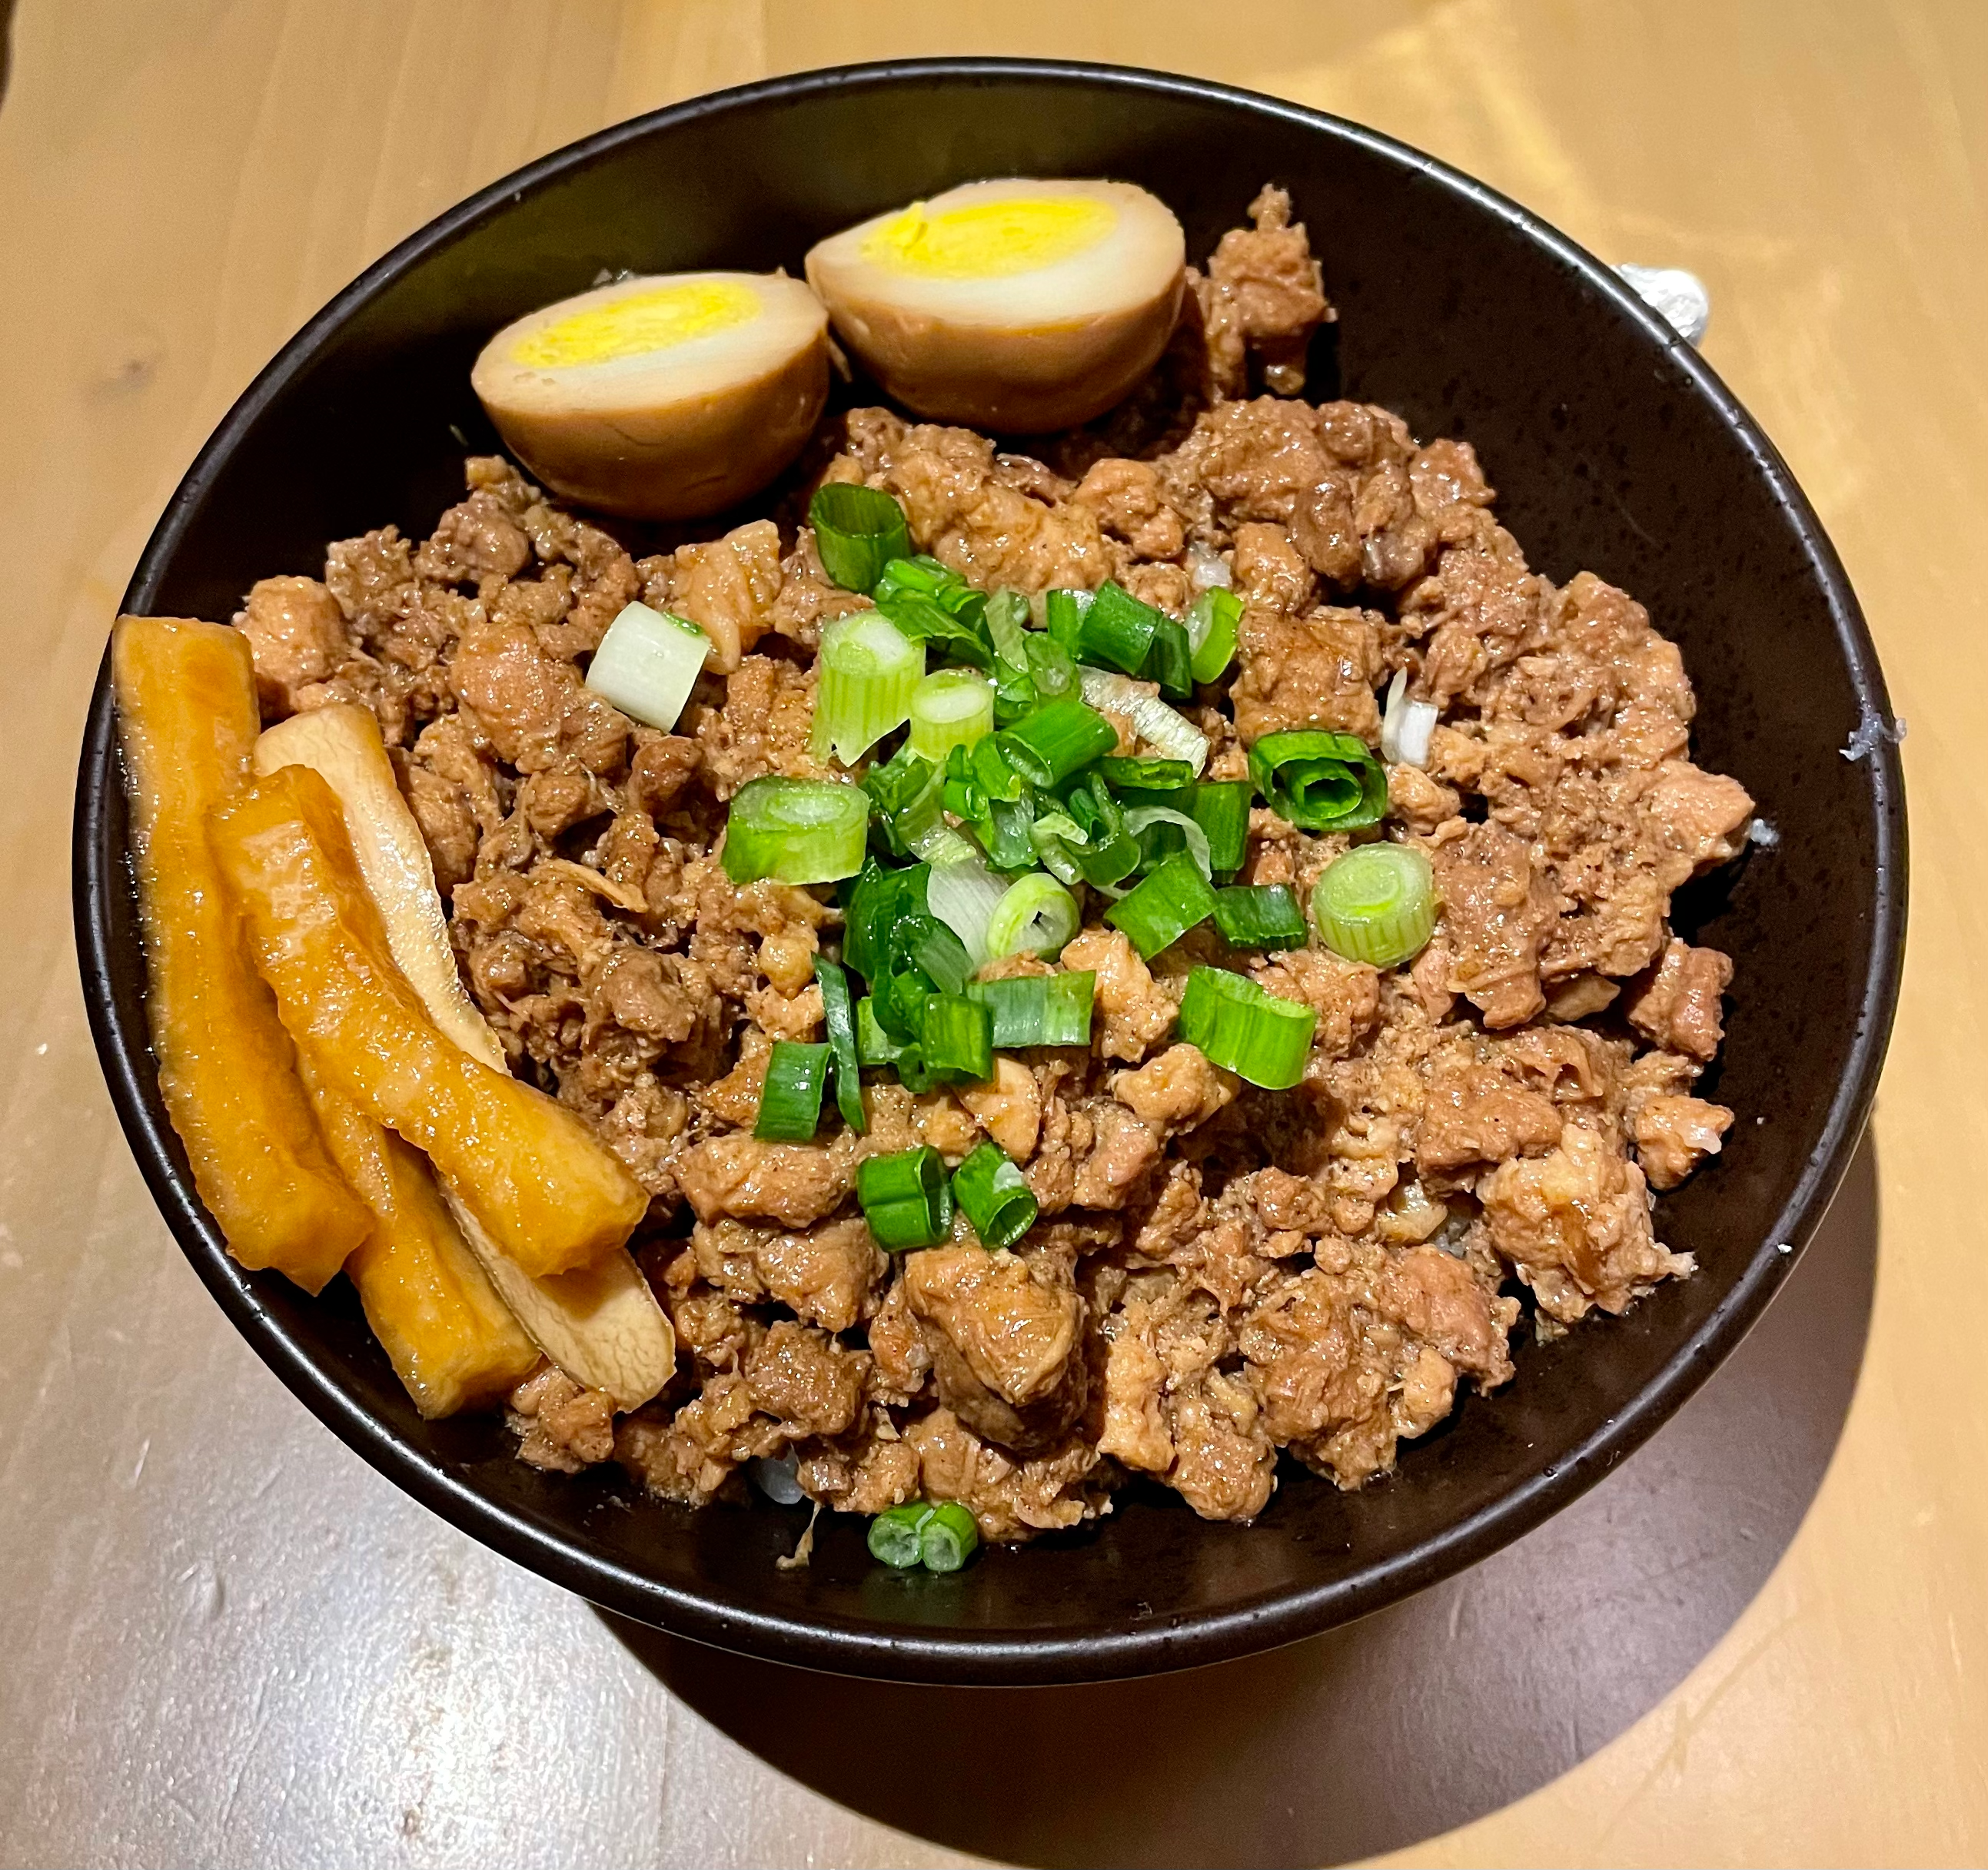 滷肉飯 / Minced Pork on Rice; $9.50